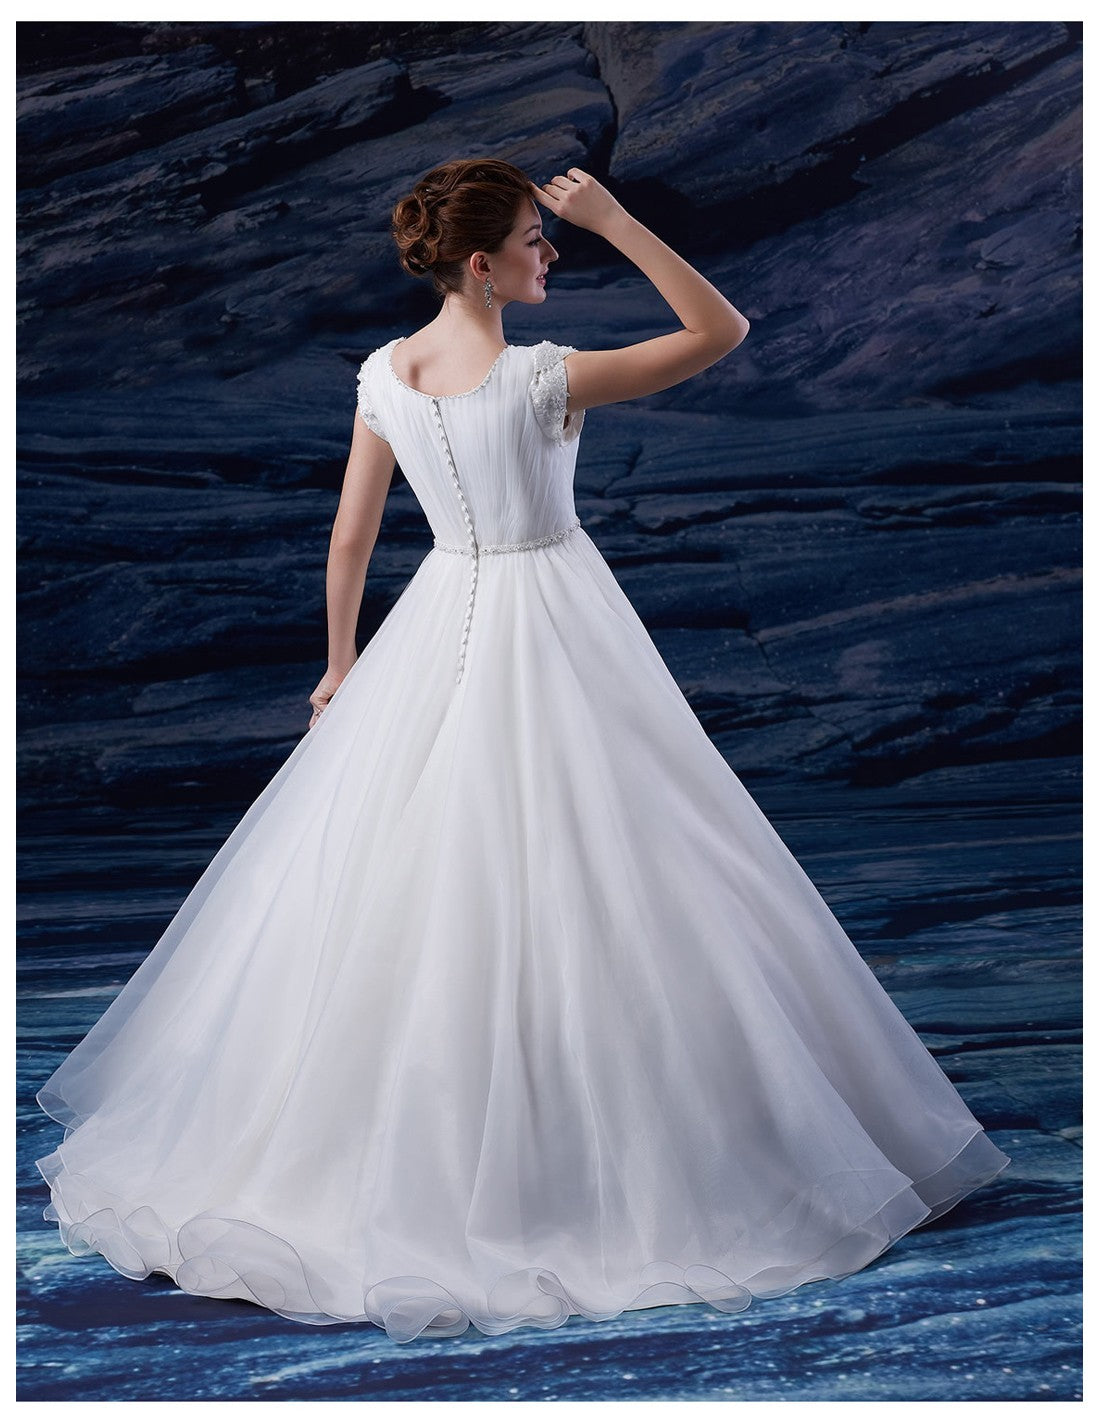 Venus Bridal TB7677 White Modest Wedding Dress back view from A Closet Full of Dresses